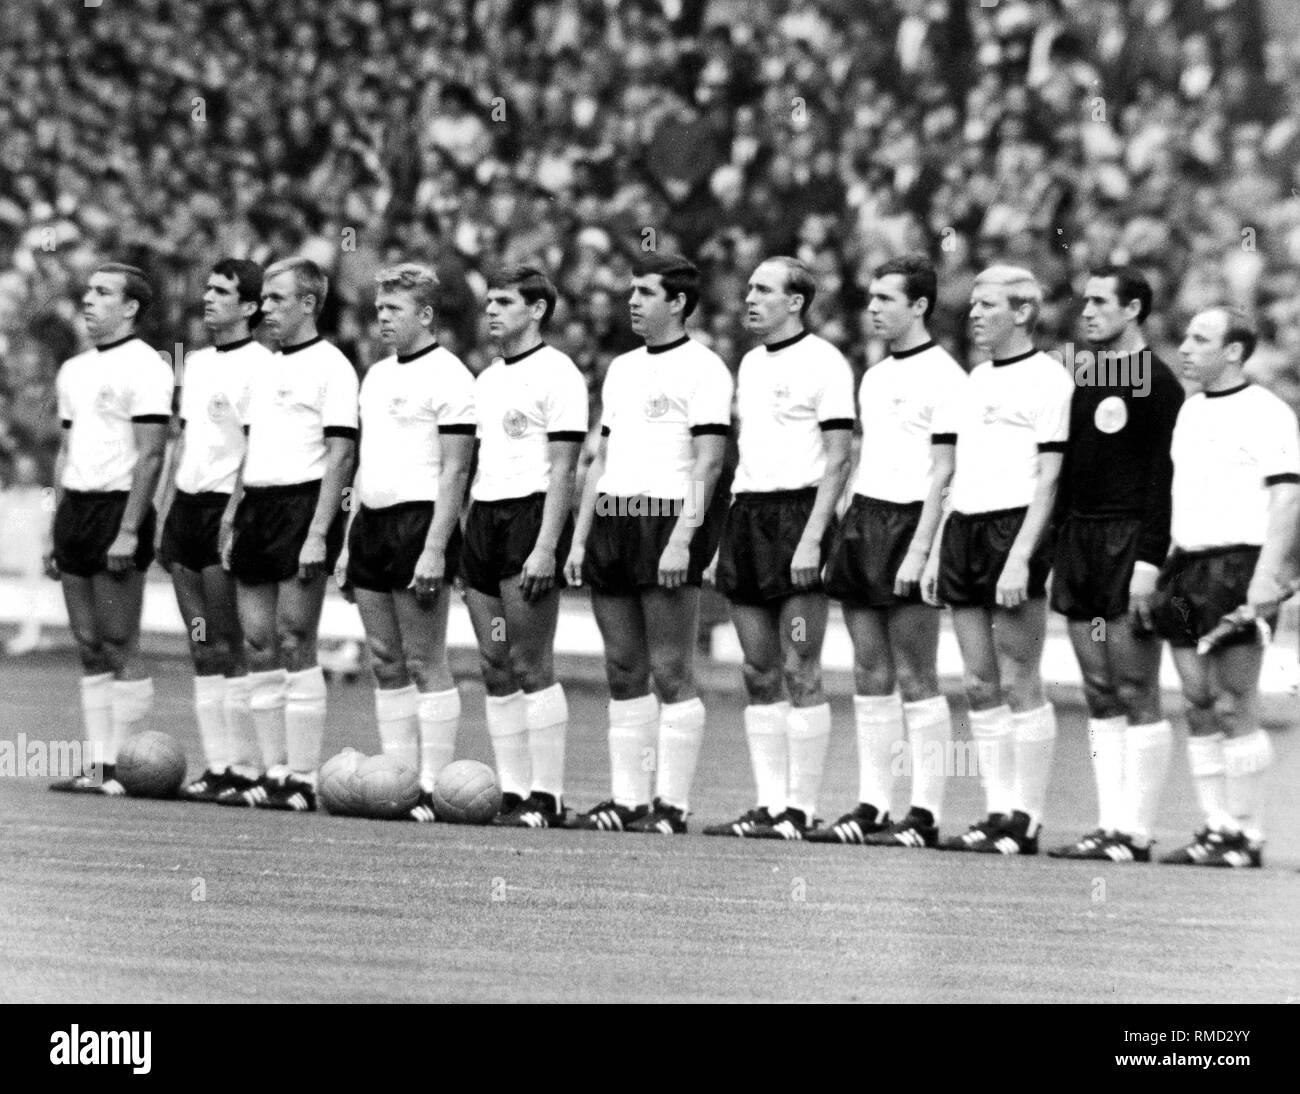 The German national team in the final of the FIFA World Cup against England. From left: Hoettges, Overath, Held, Haller, Weber, Emmerich, Schulz, Beckenbauer, Schnellinger, Tilkowski and Seeler, 1966. Stock Photo